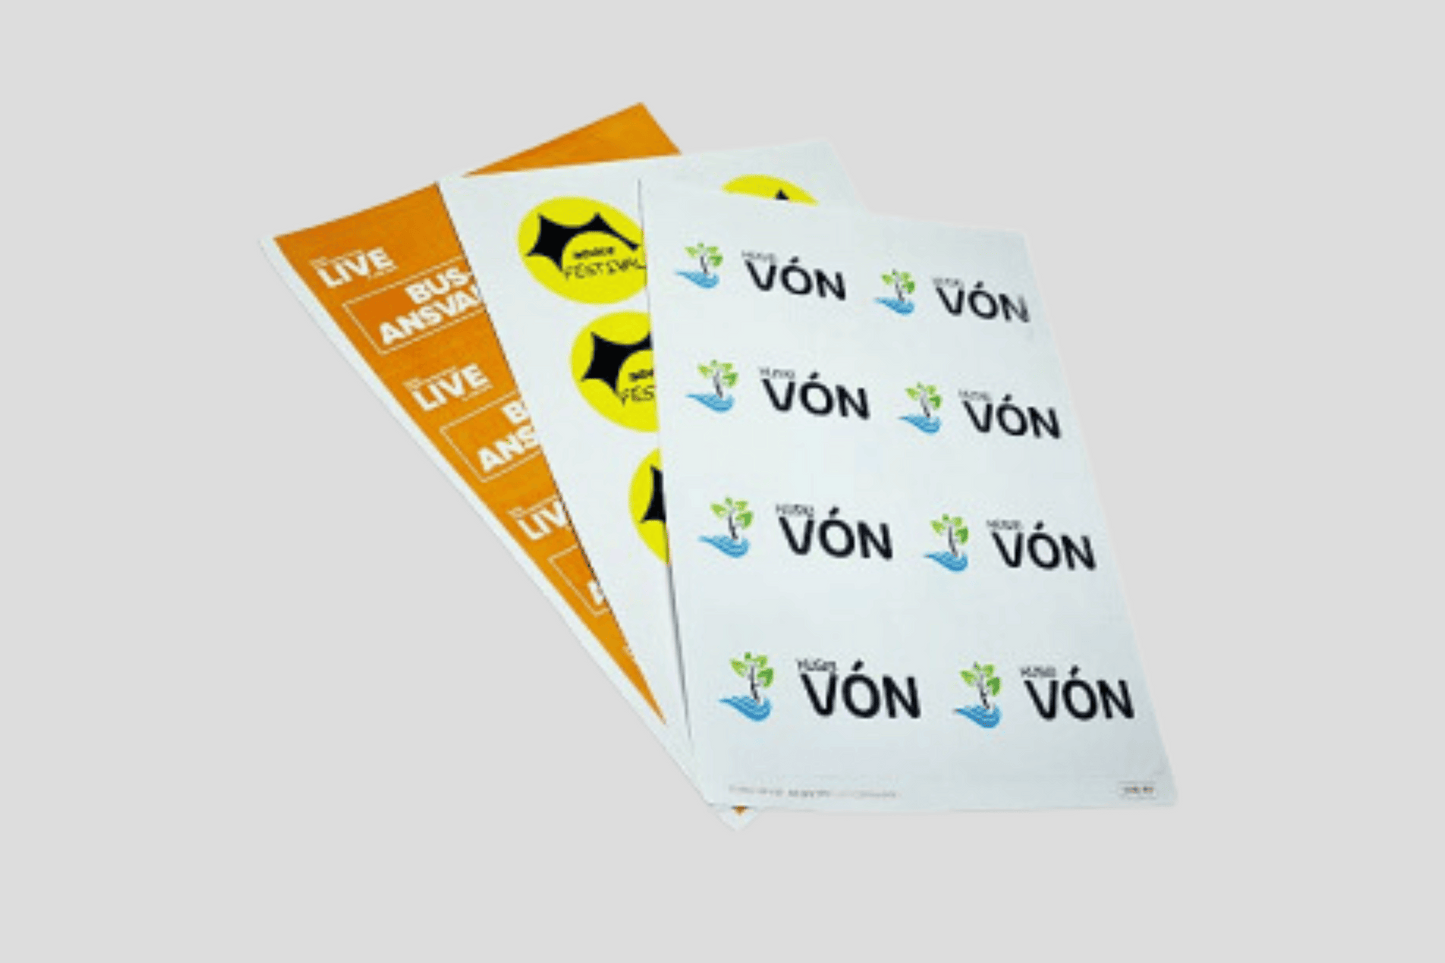 Stickers A4 Sheet with Print - Inquire Accessories JM Band EU   